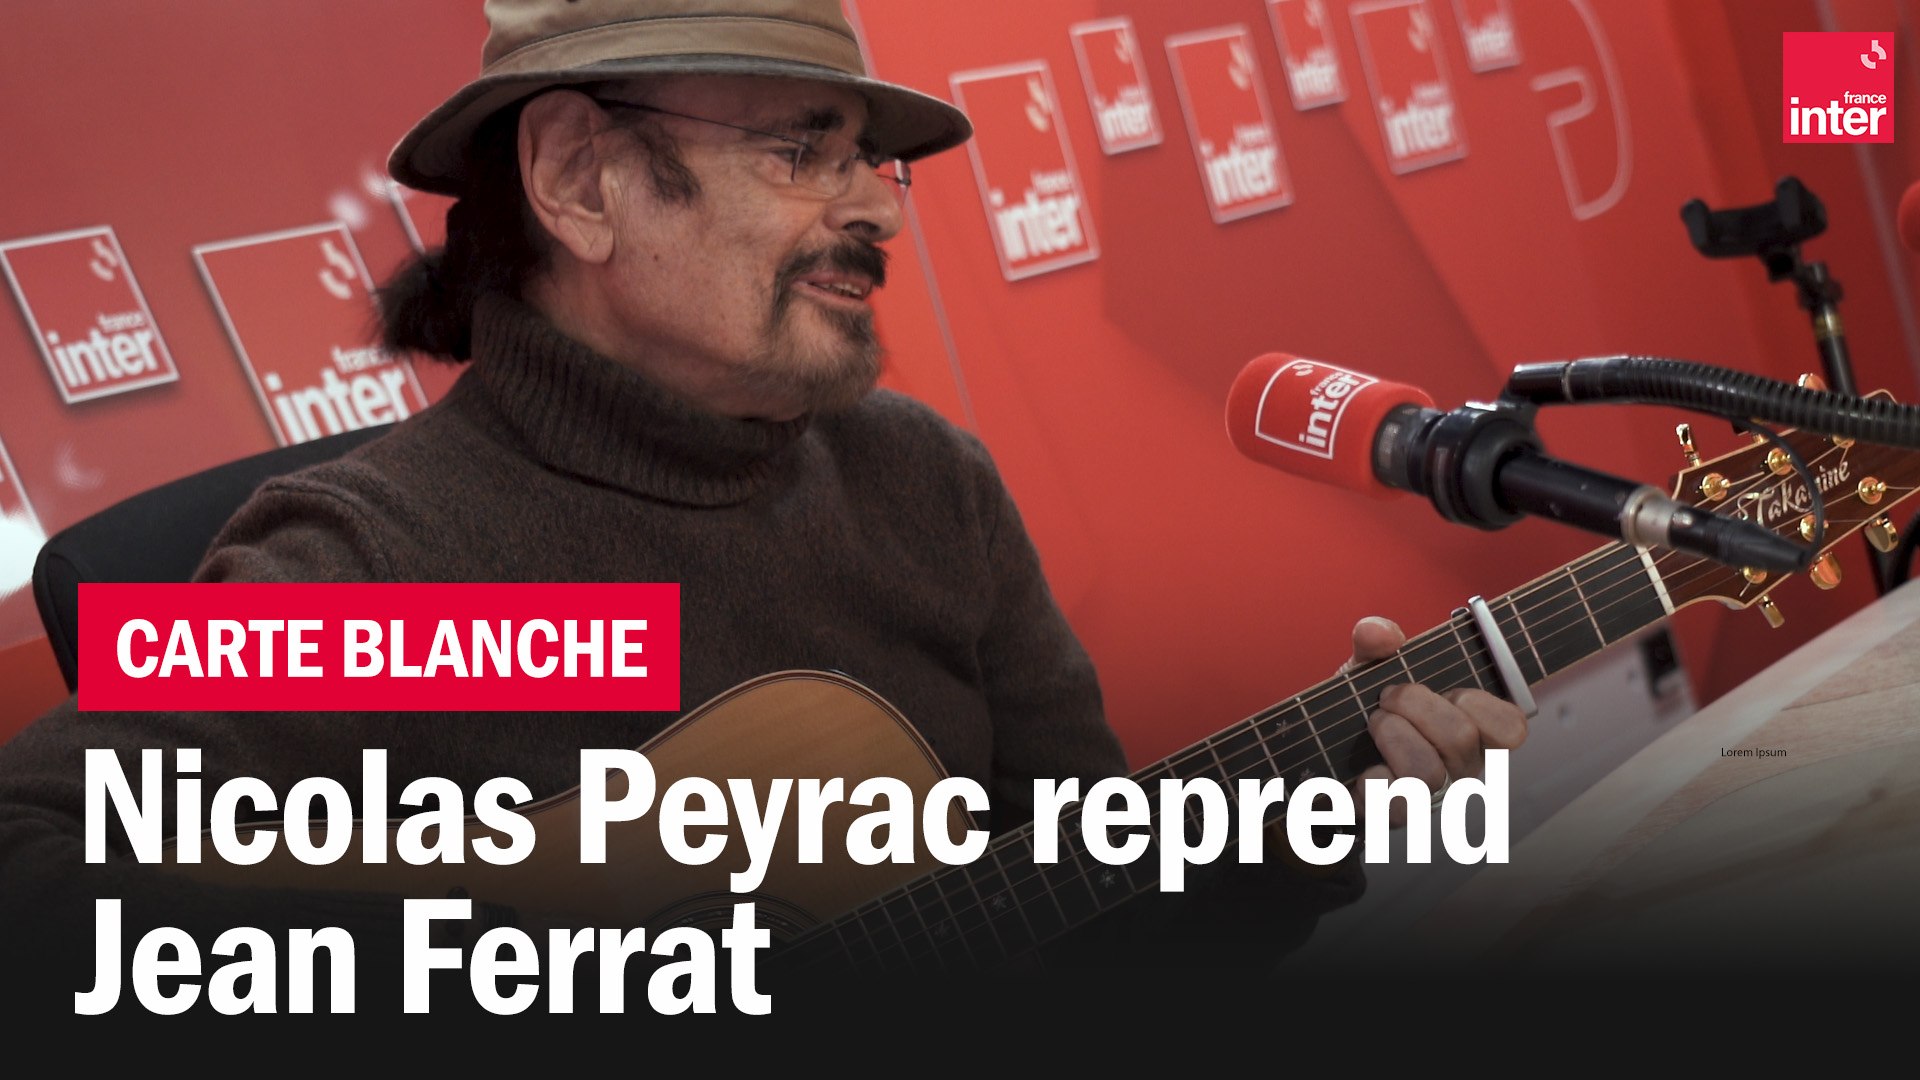 Nicolas Peyrac reprend "Ma môme" de Jean Ferrat - La carte blanche - Vidéo  Dailymotion